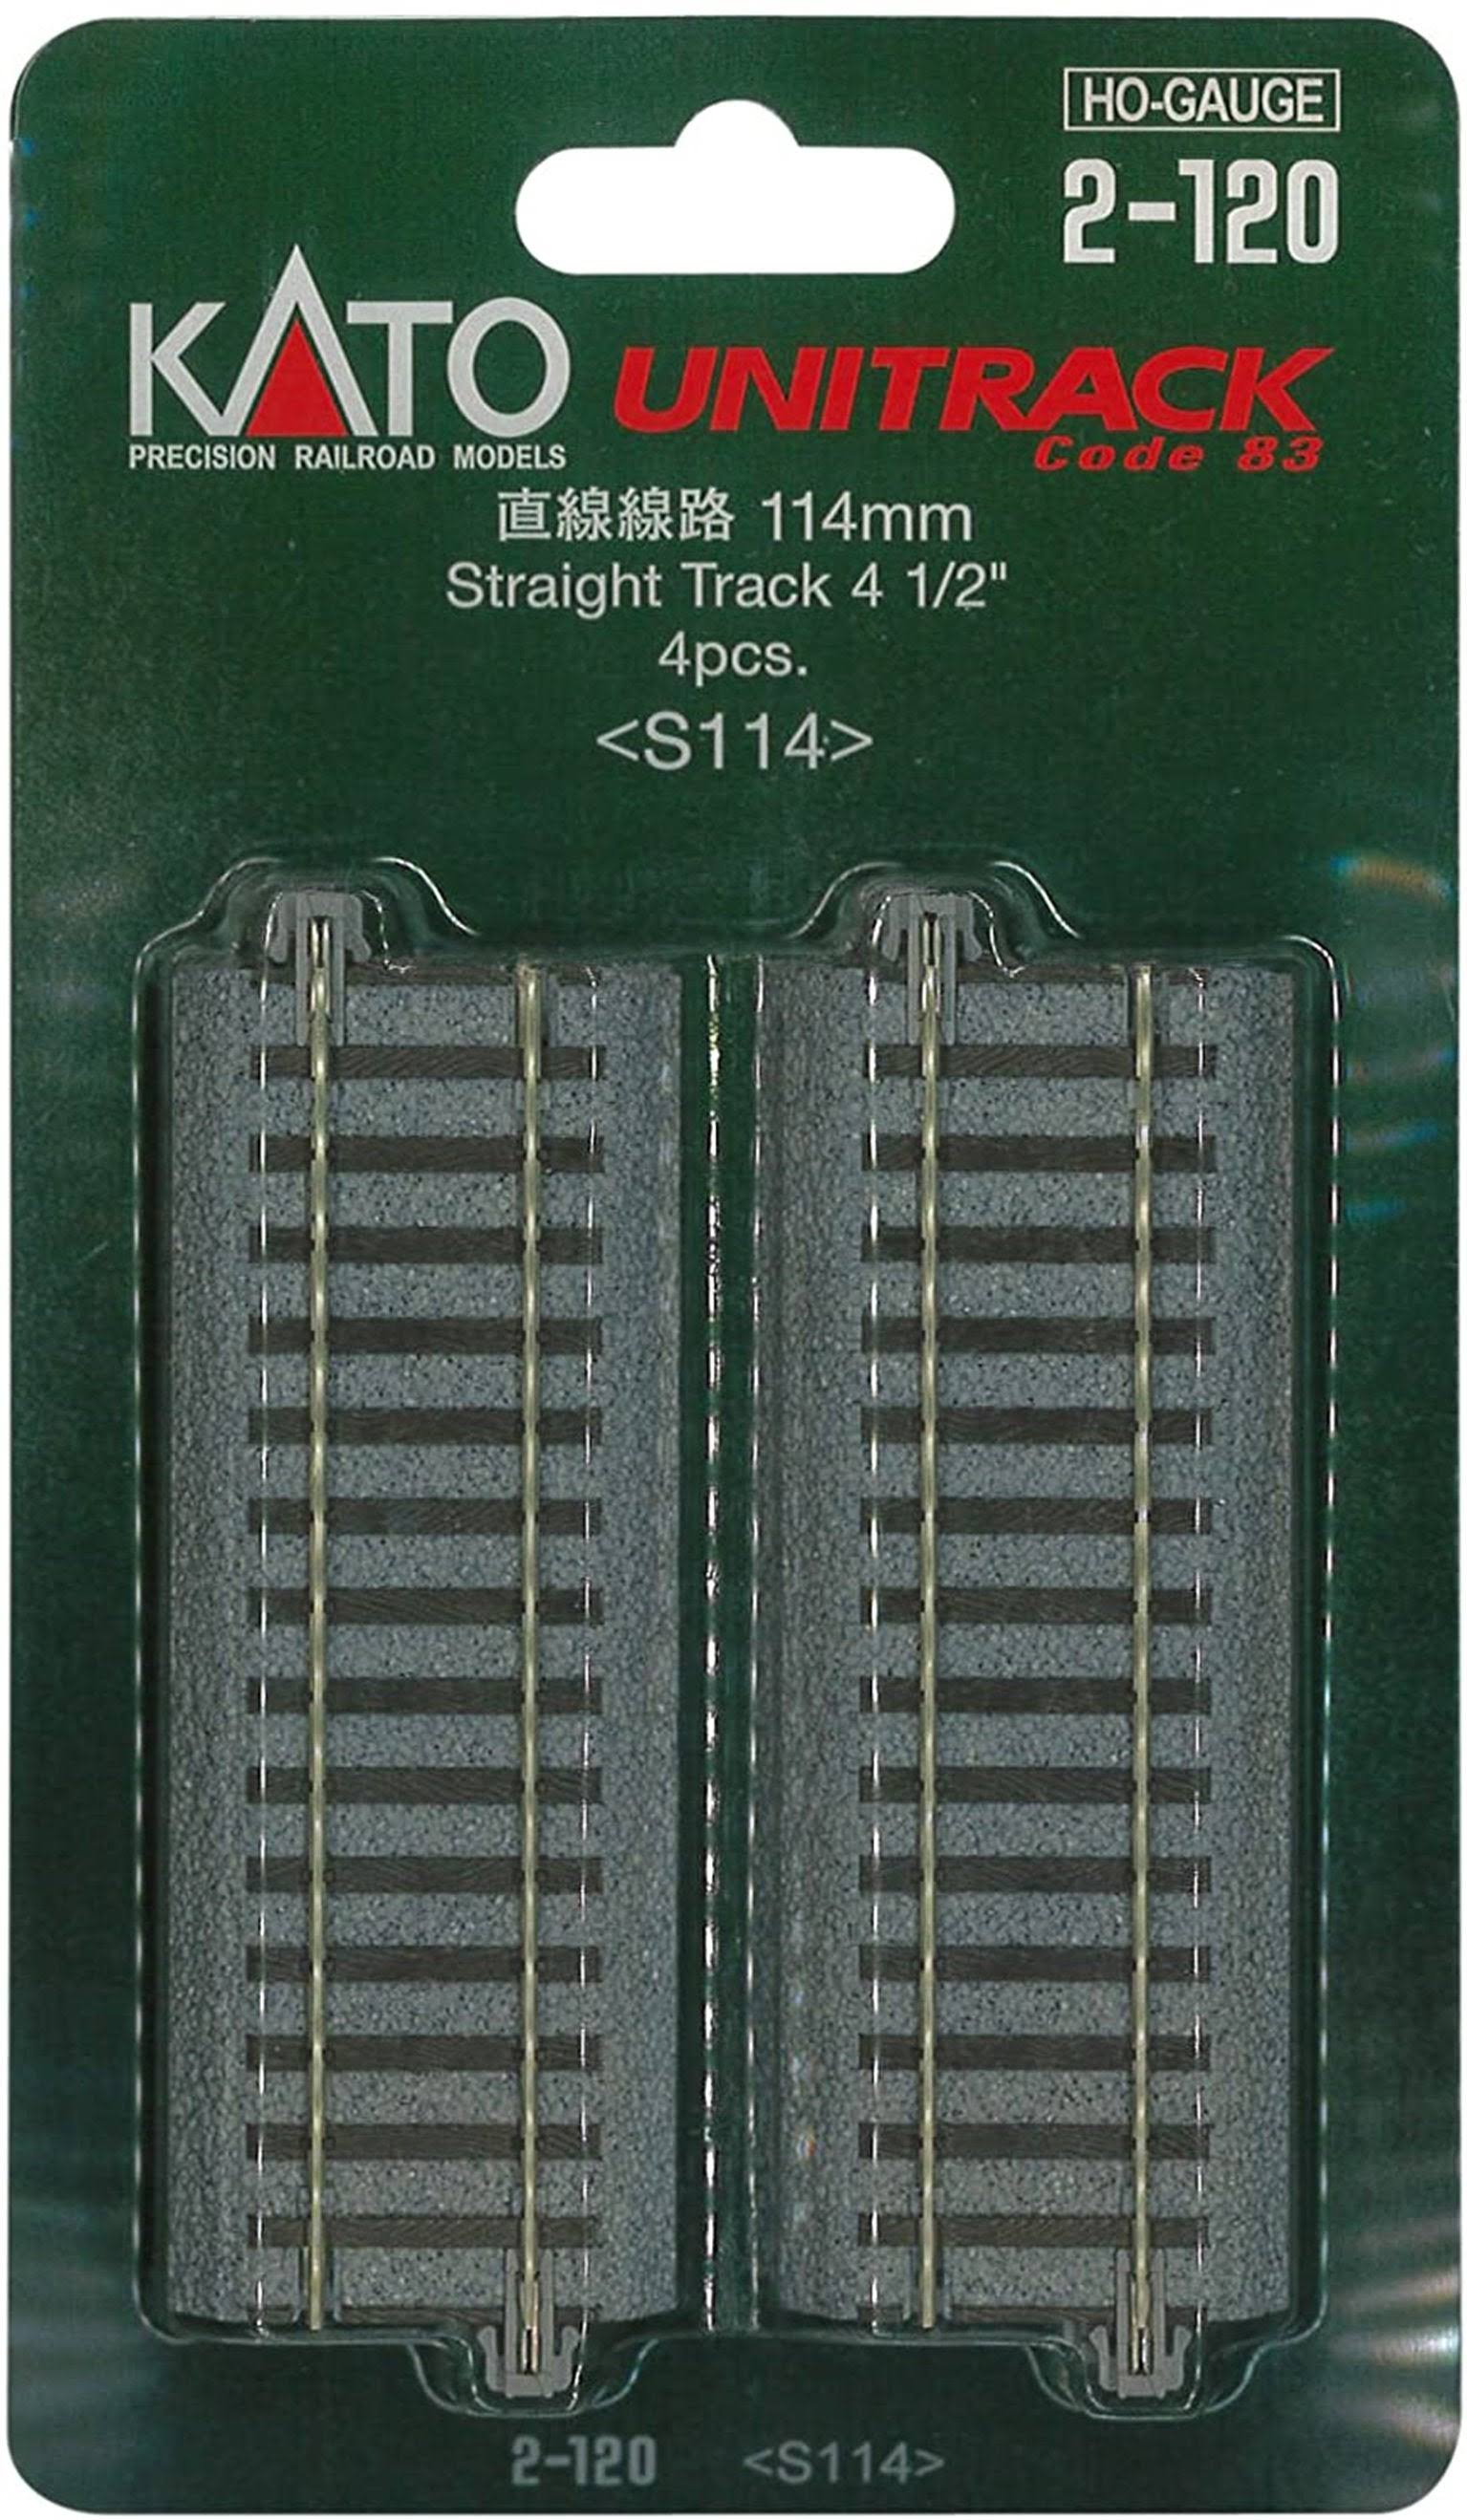 Kato HO Scale Unitrack Straight Track - 4pcs, 114mm, 4 1/2"